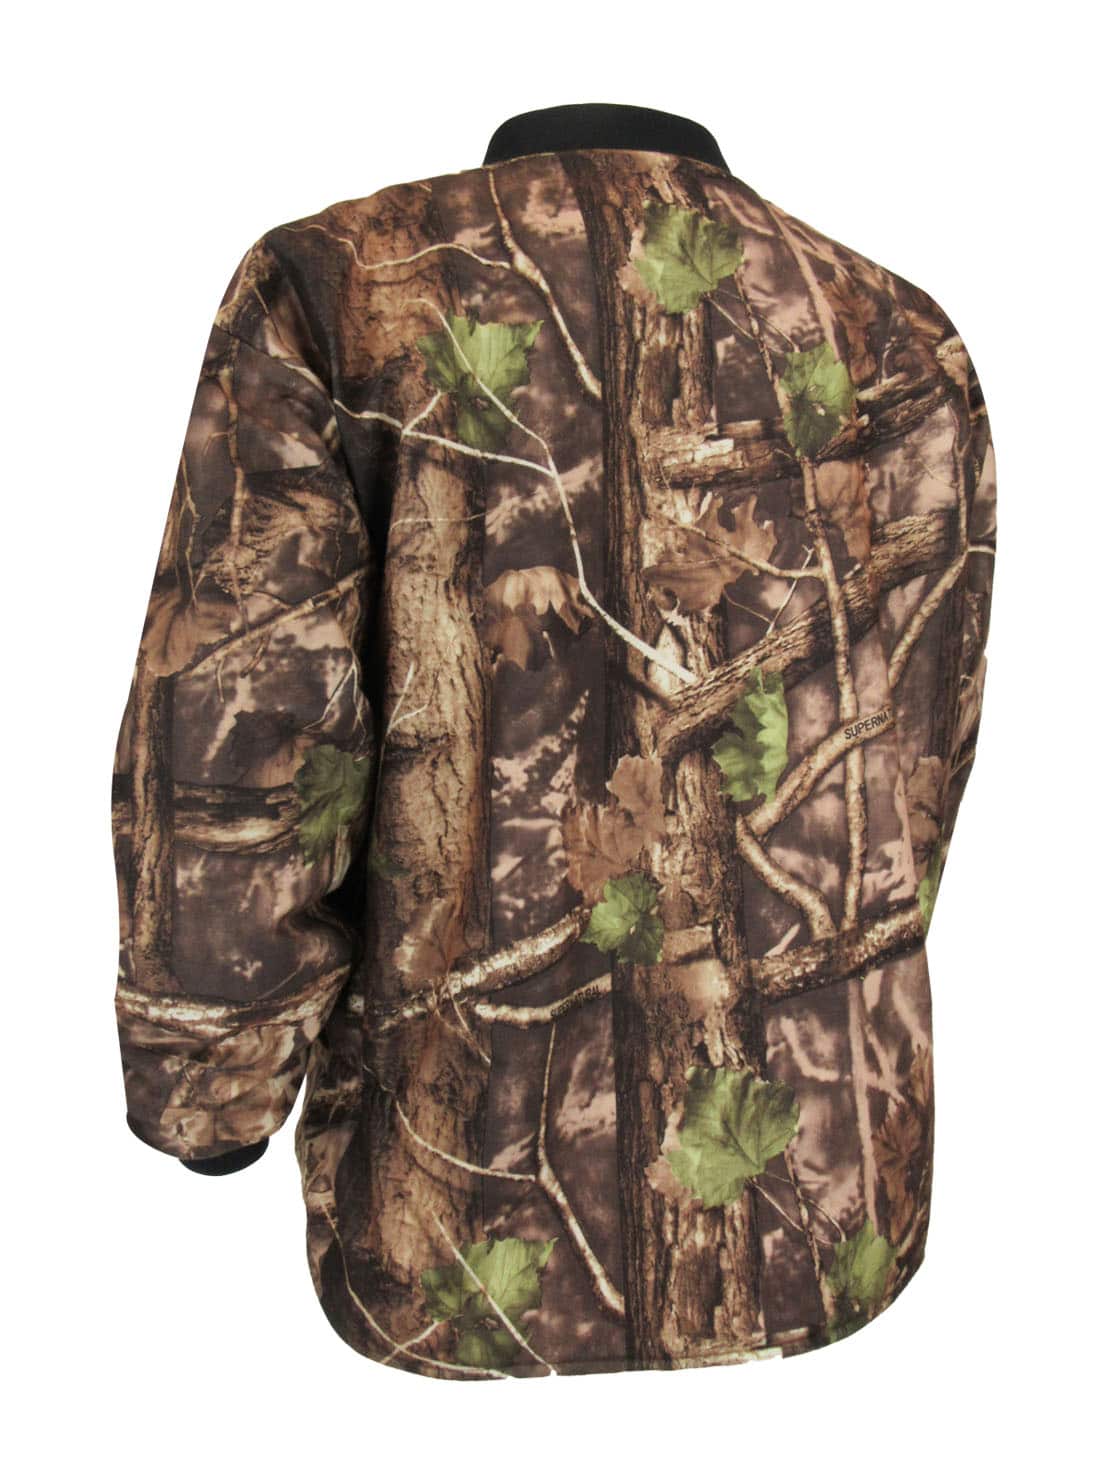 Hunting reversible jacket.